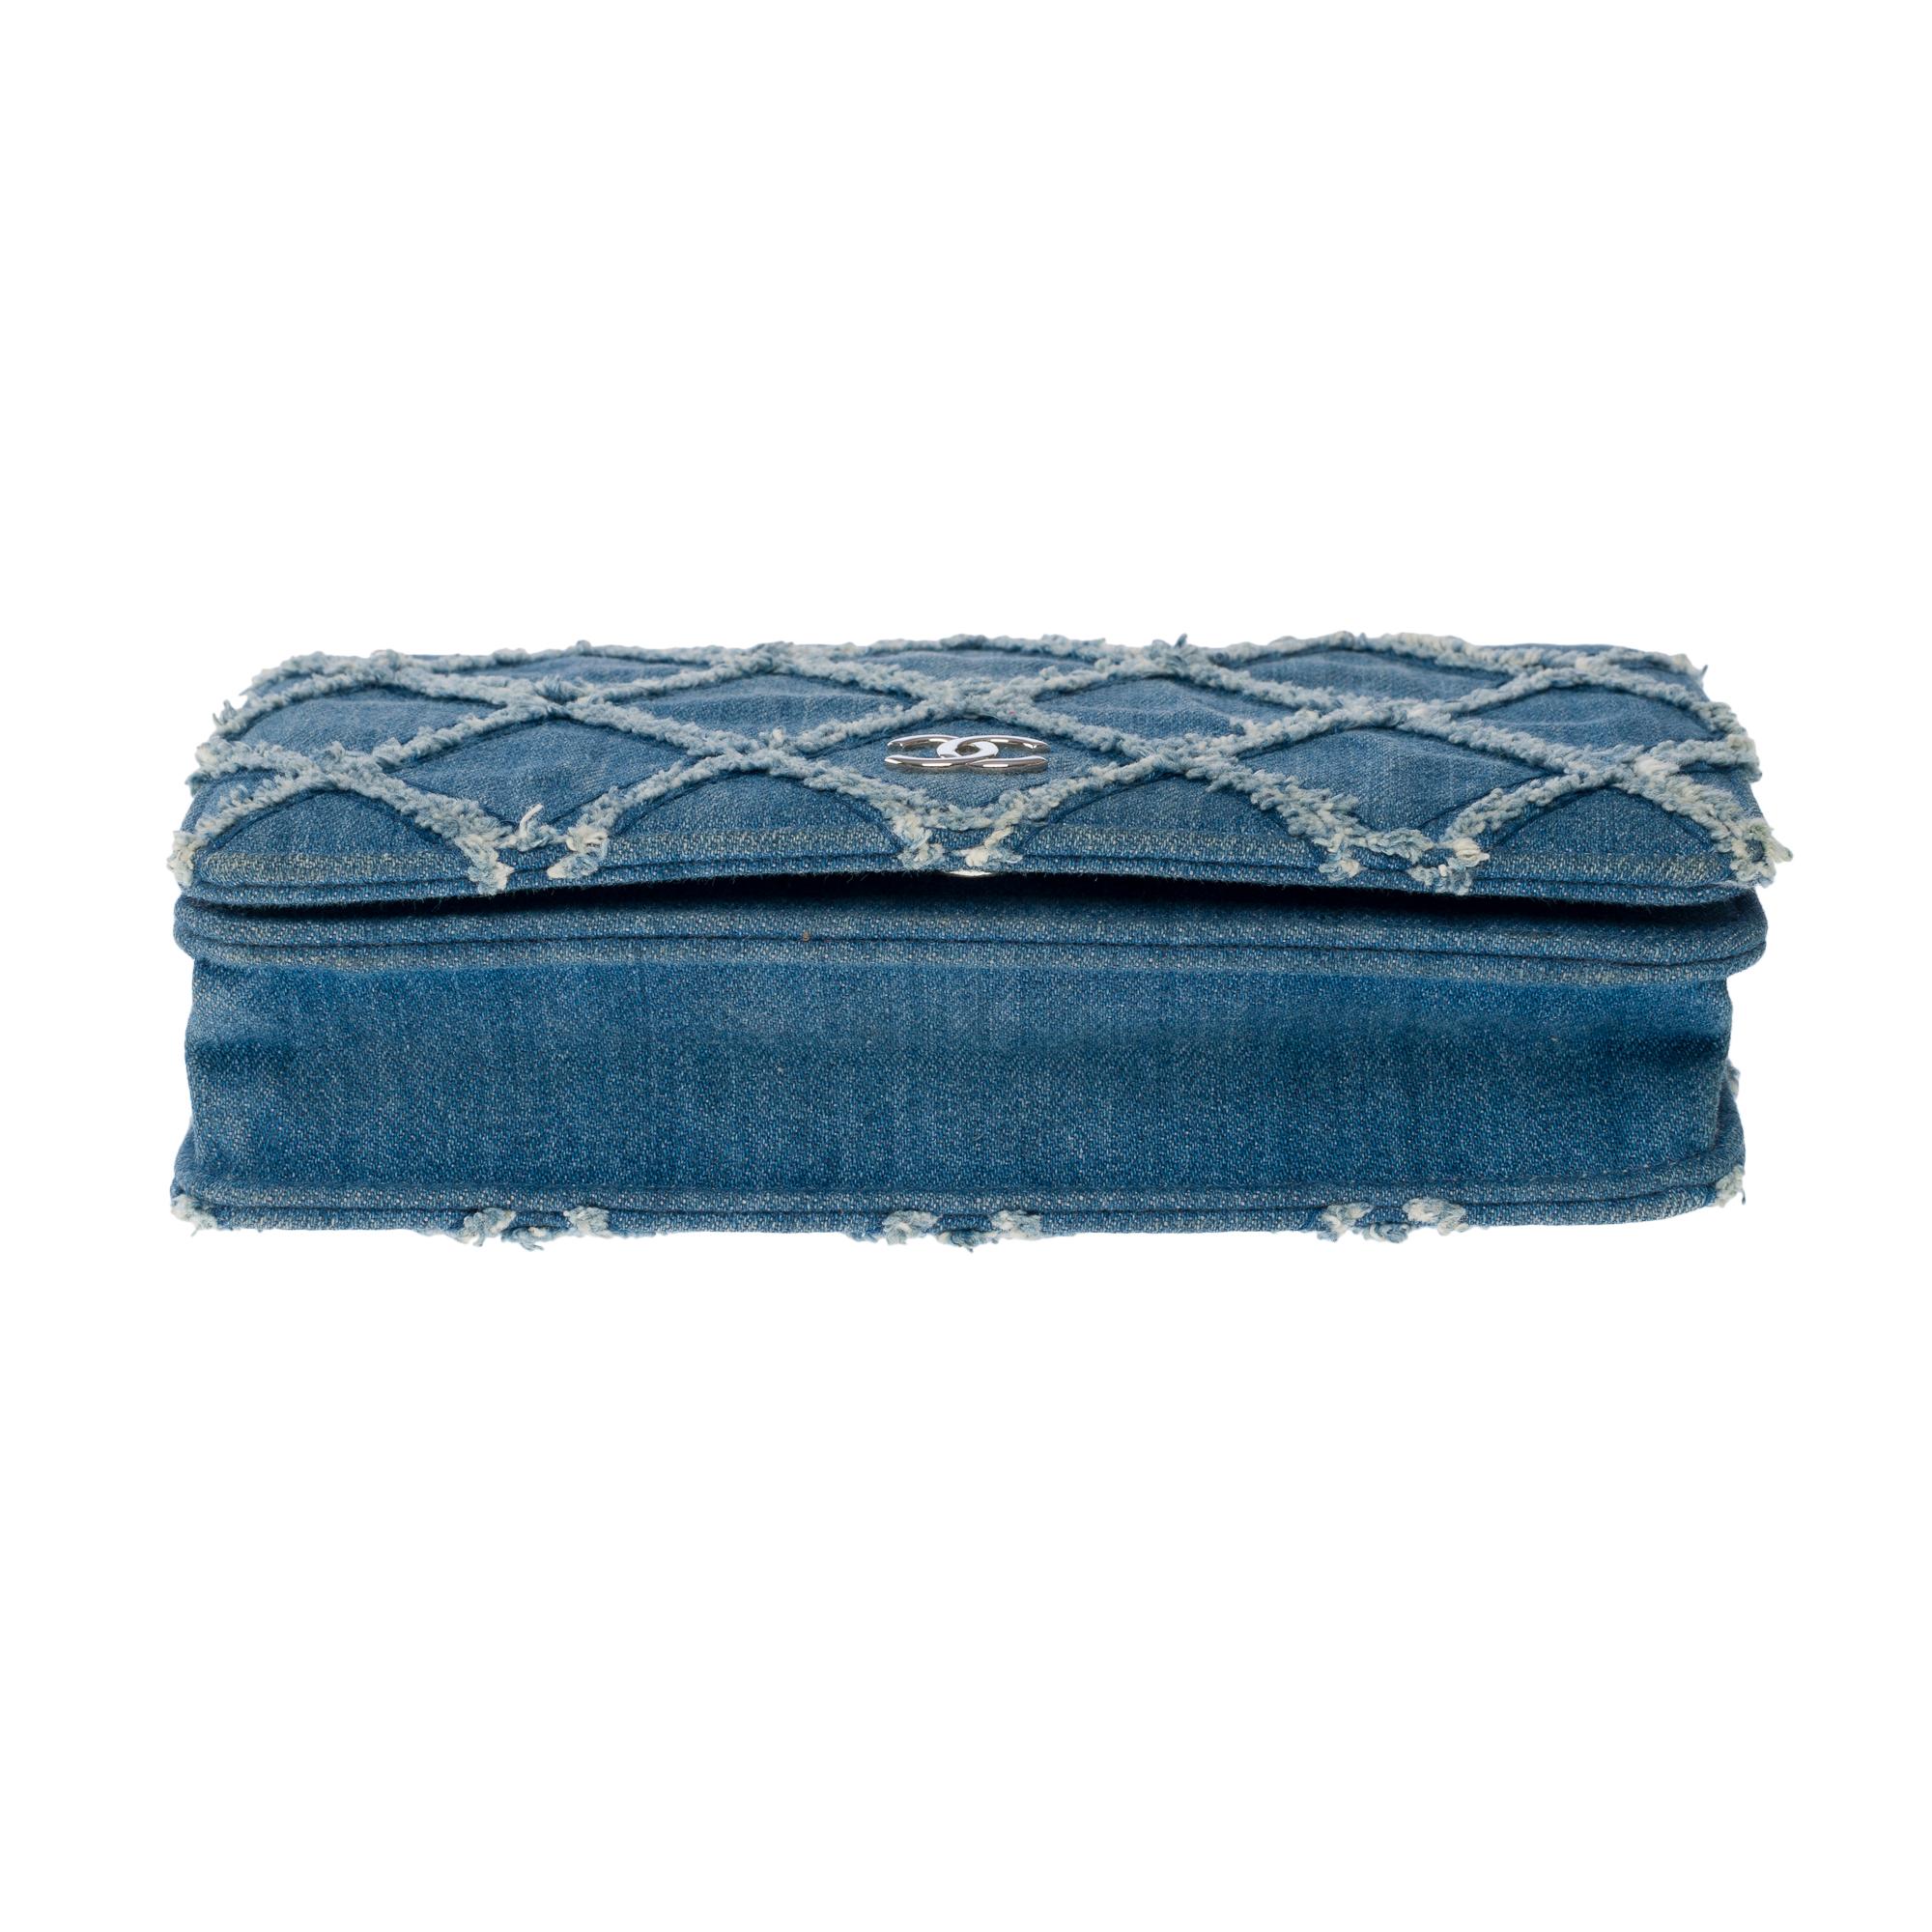 Rare & Amazing Chanel Wallet on Chain (WOC) shoulder bag in Blue denim, SHW 7